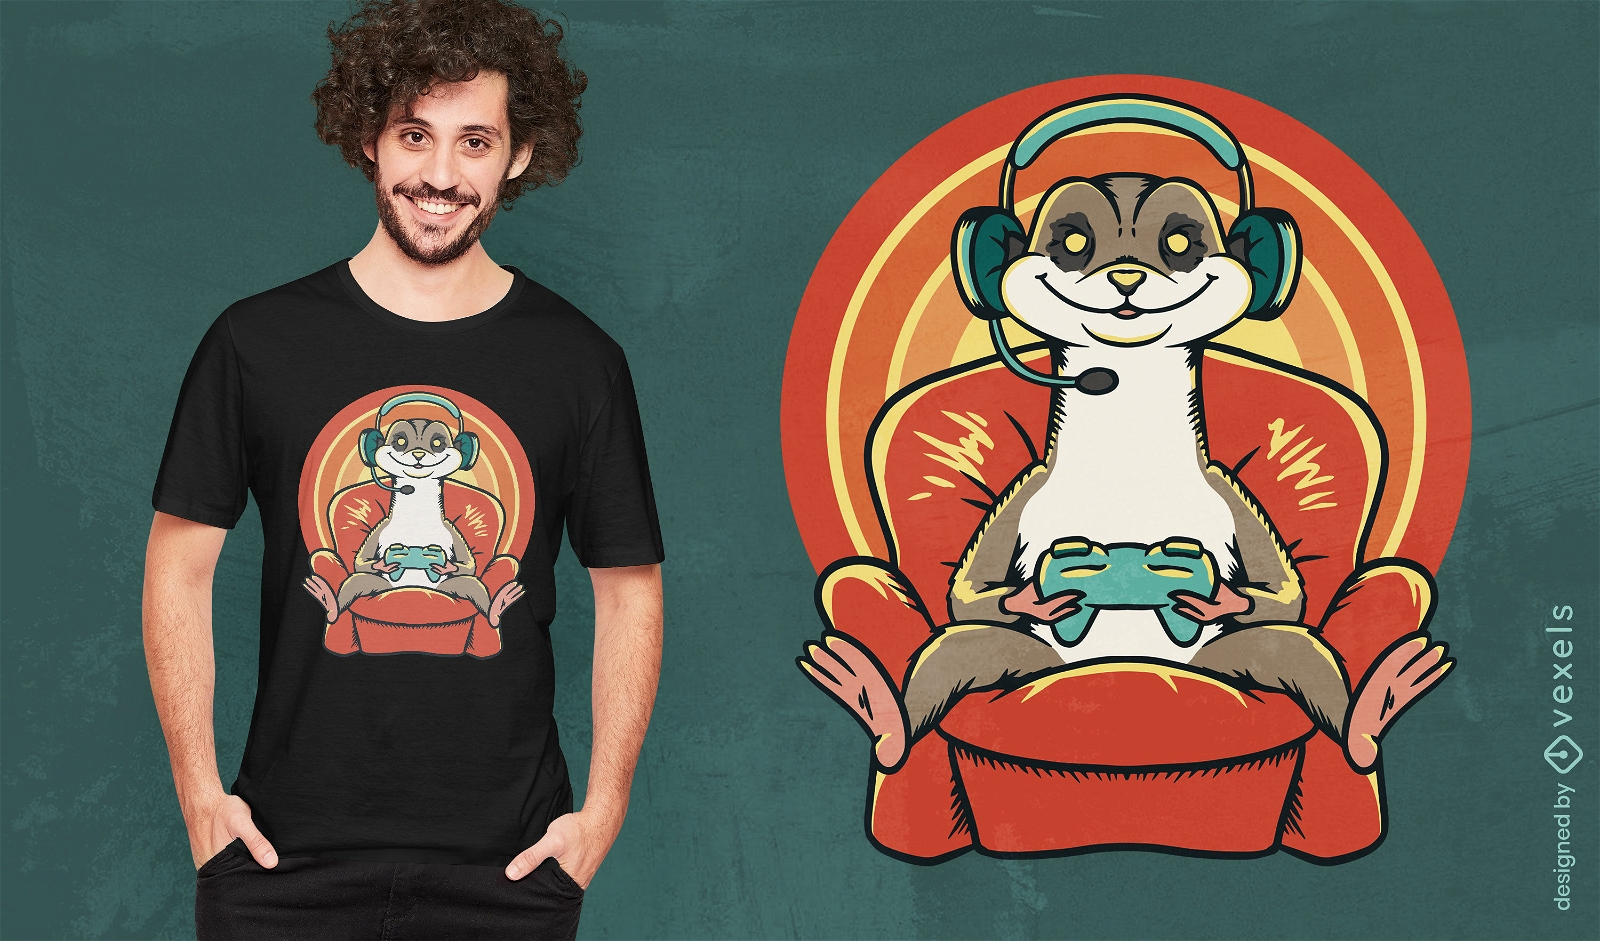 Meerkat playing videogames t-shirt design